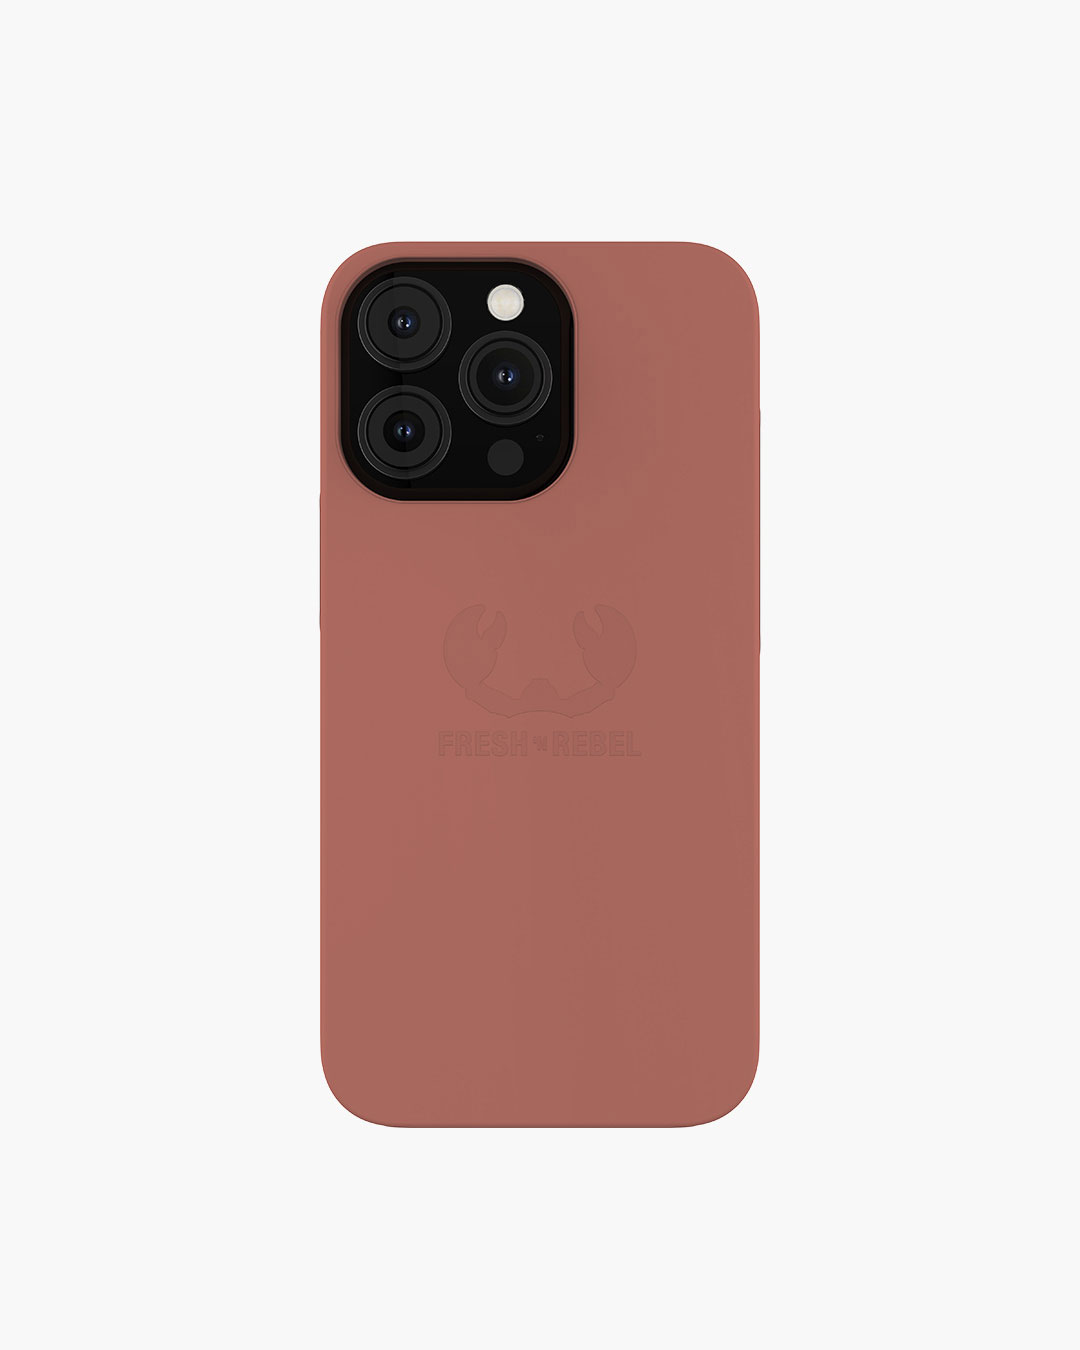 Fresh 'n Rebel - Phone Case iPhone 13 Pro - Safari Red